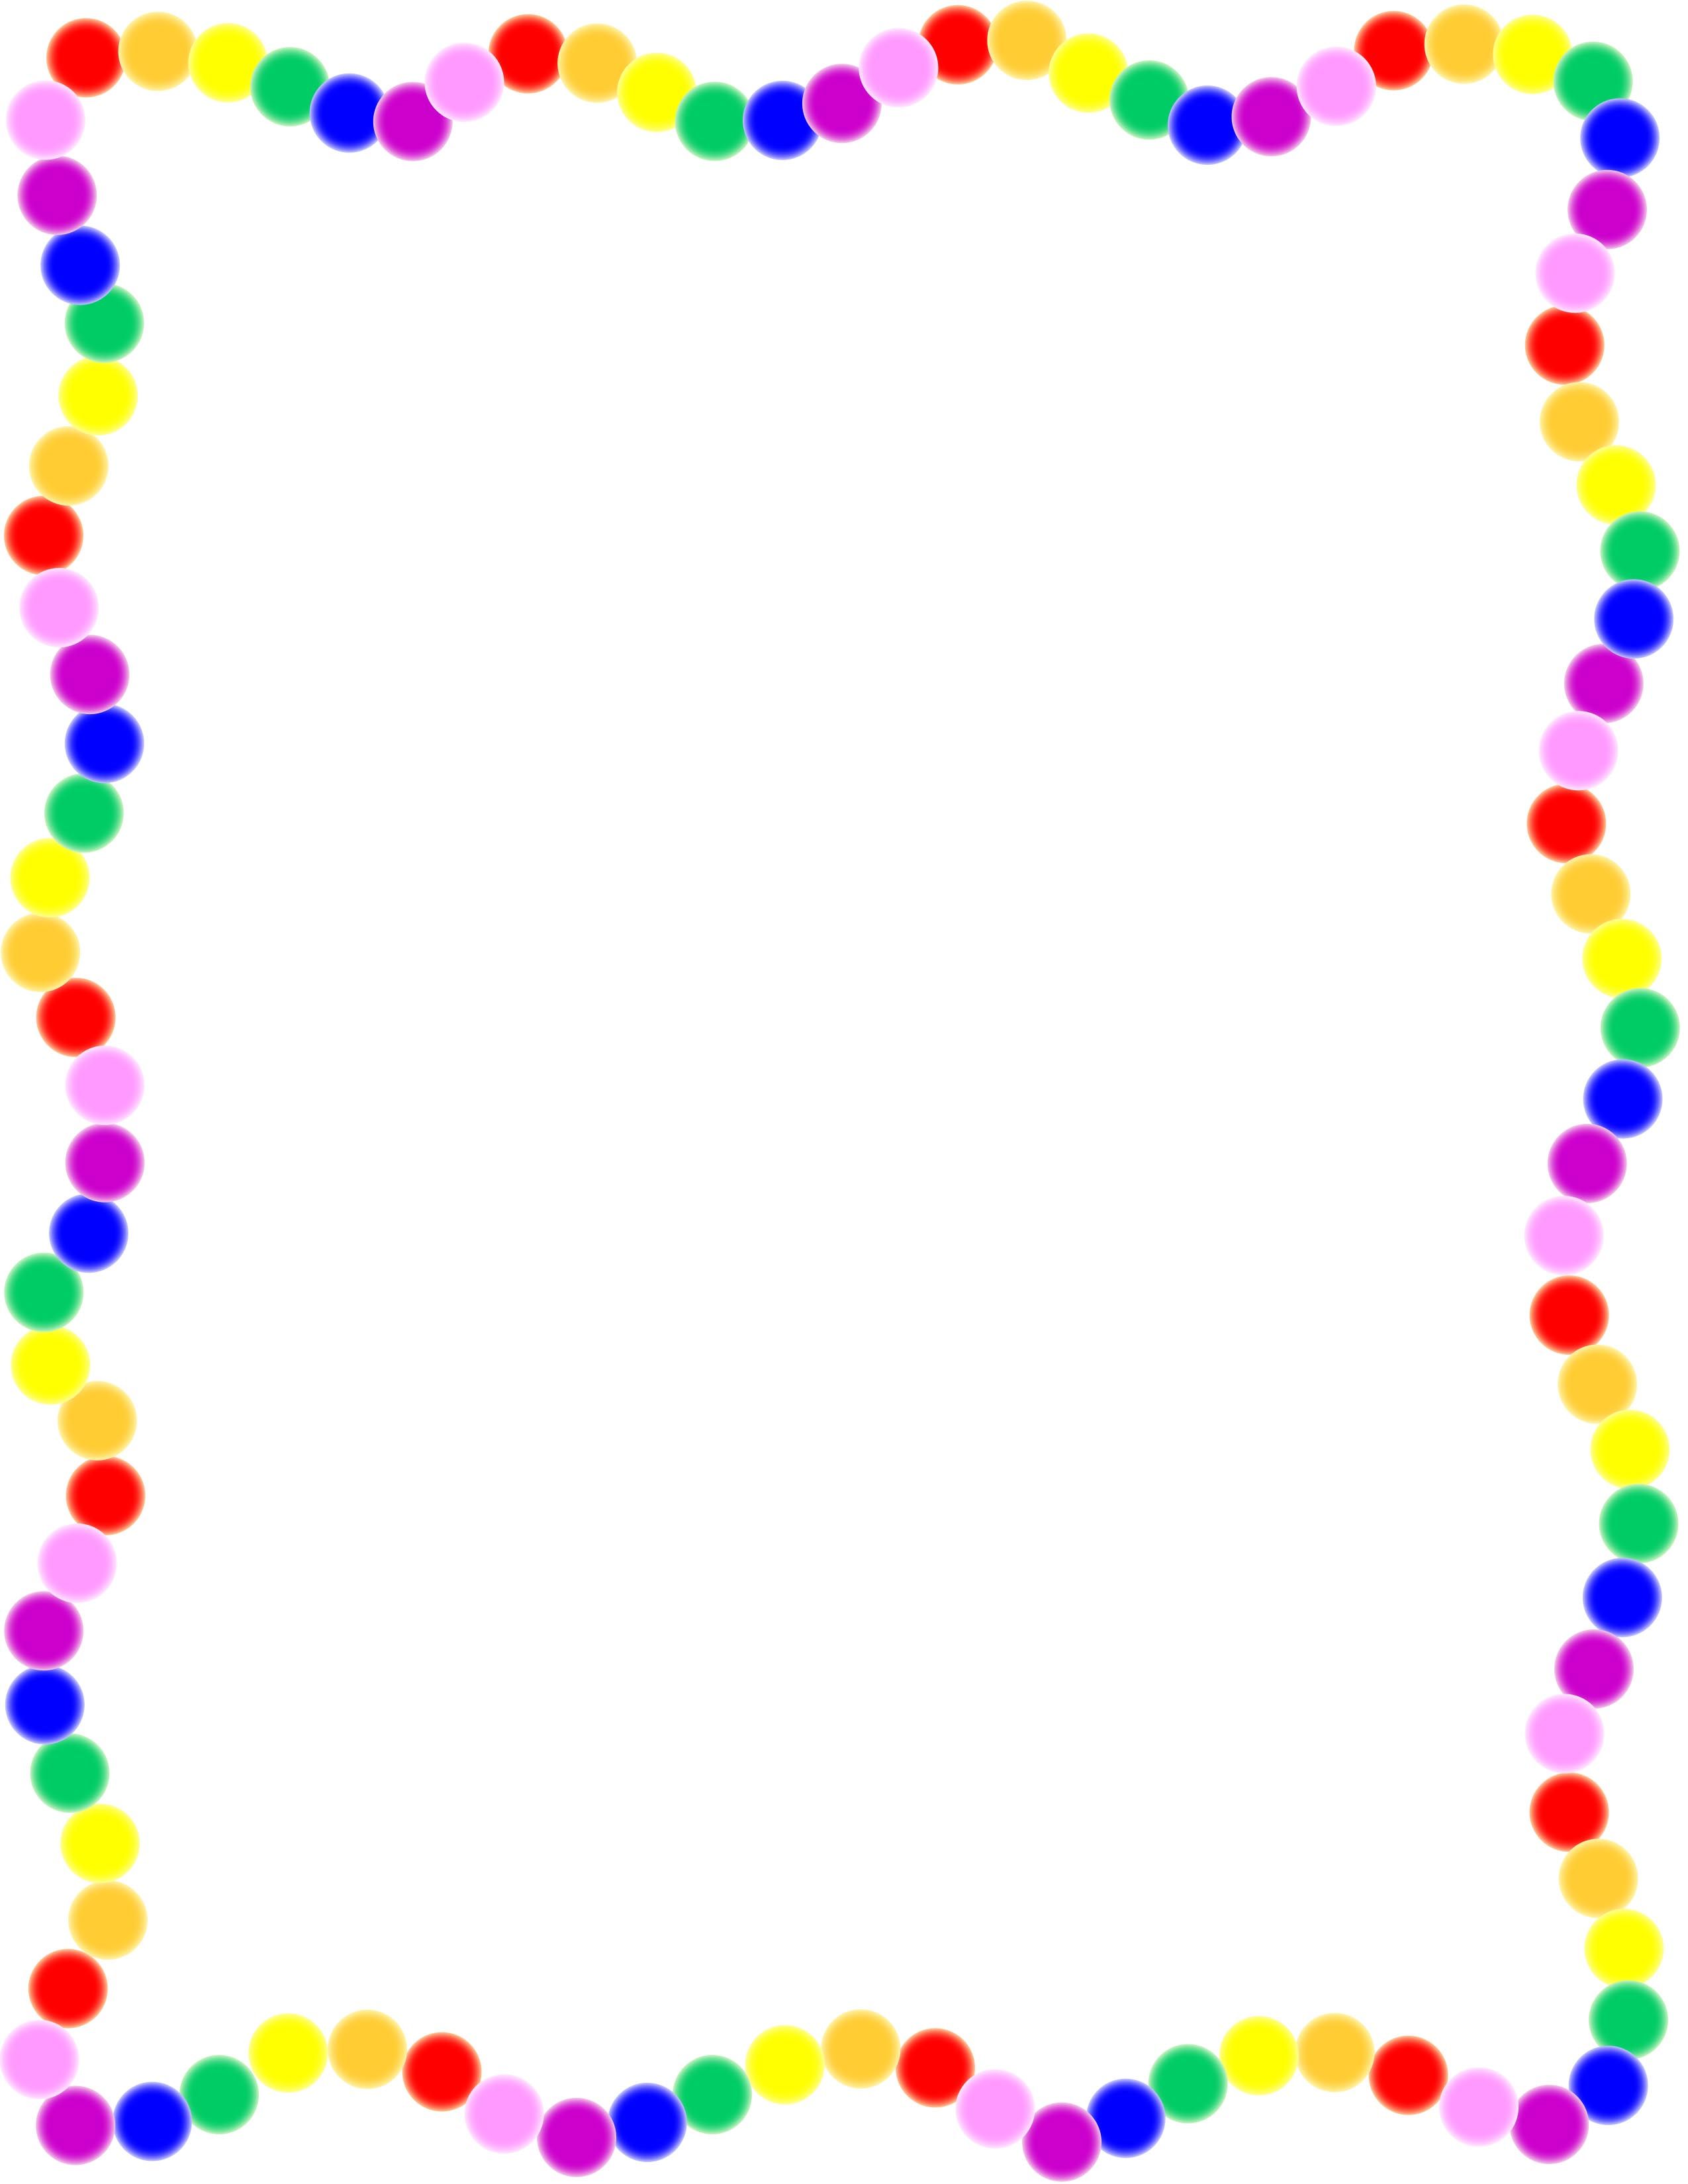 Rainbow border doodle.